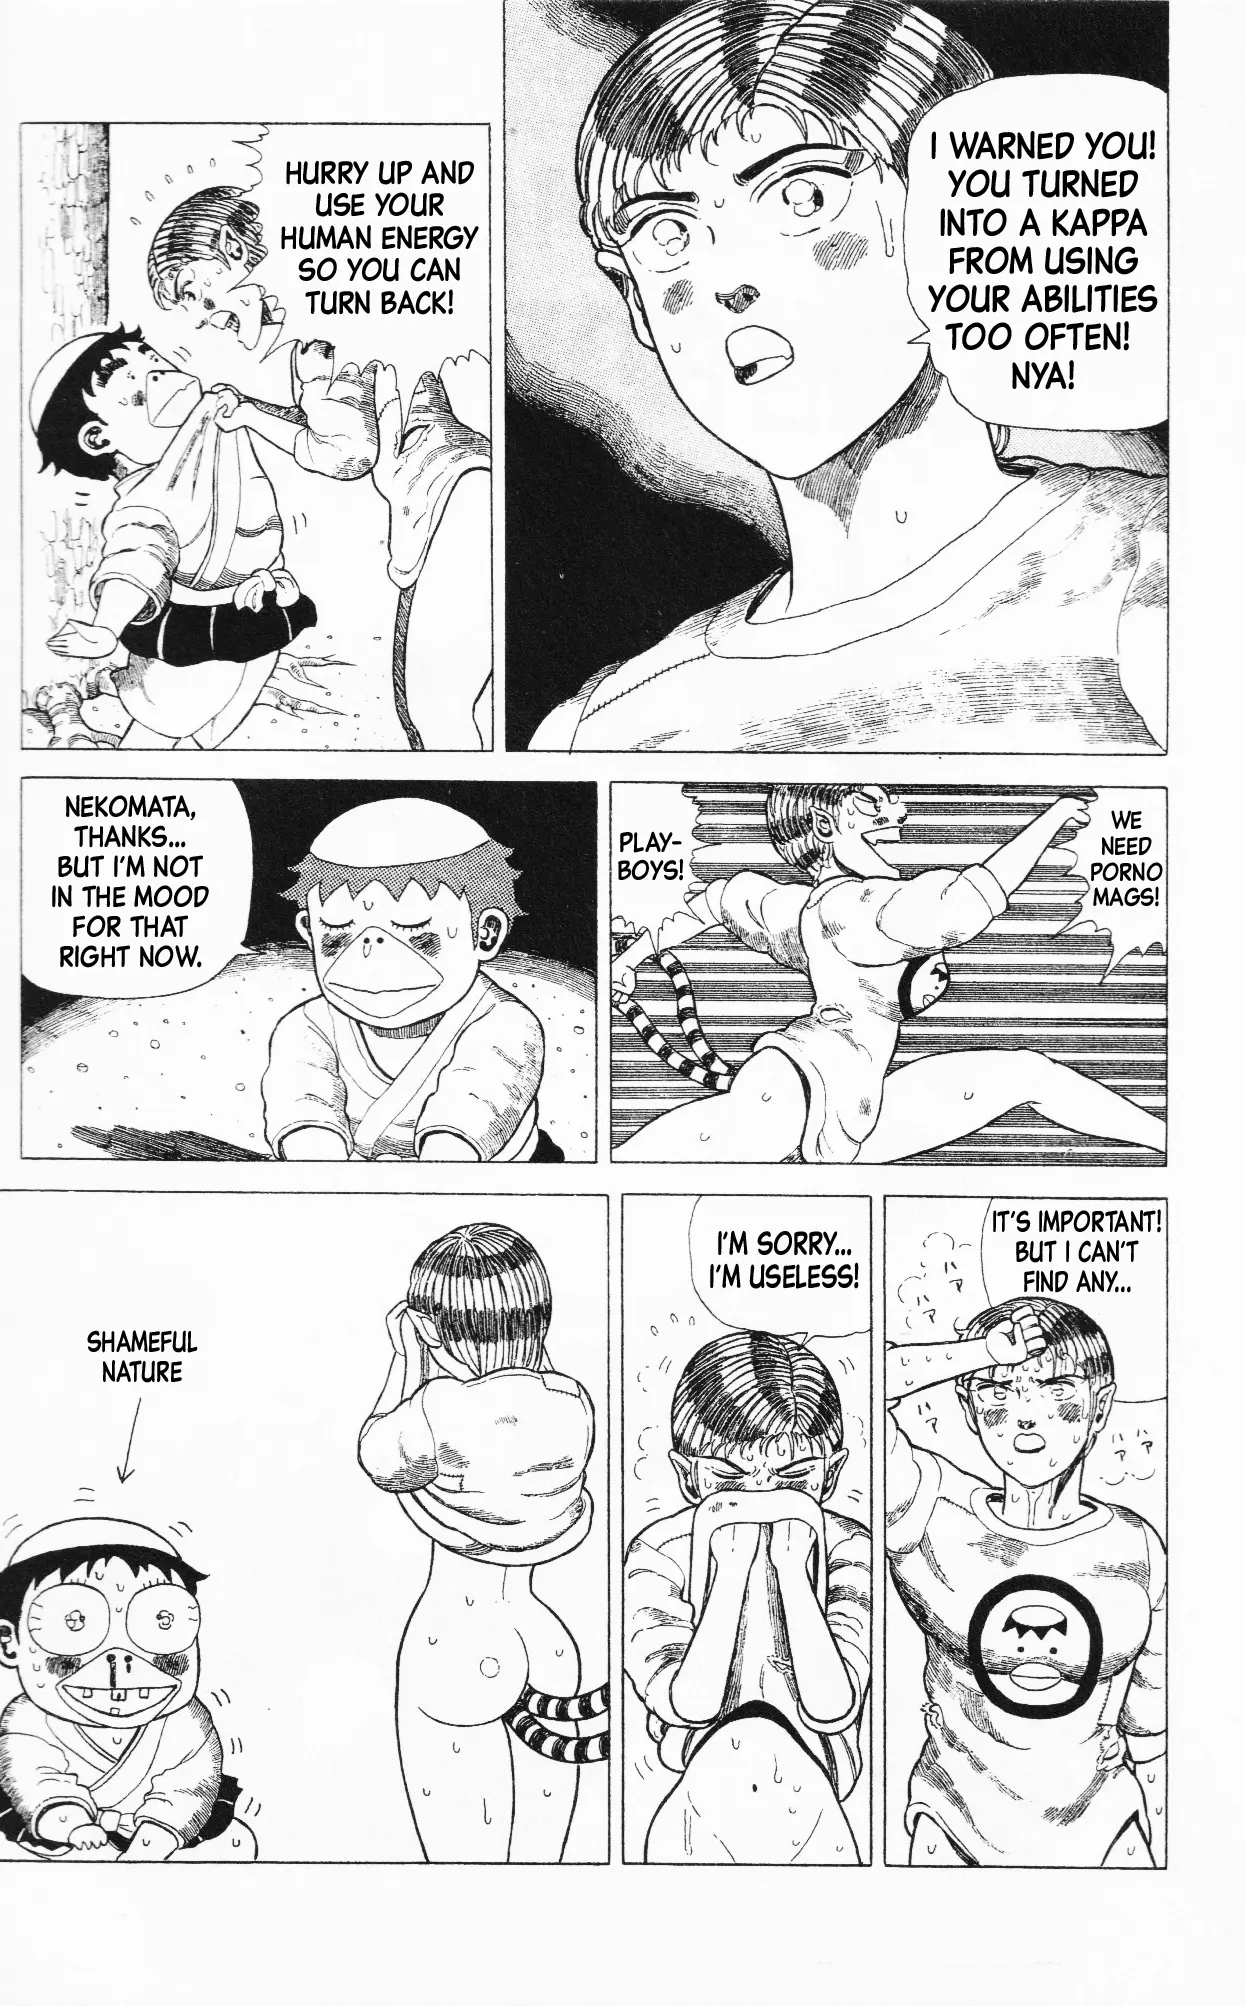 Mizu No Tomodachi Kappaman - 14 page 1-fe814af4